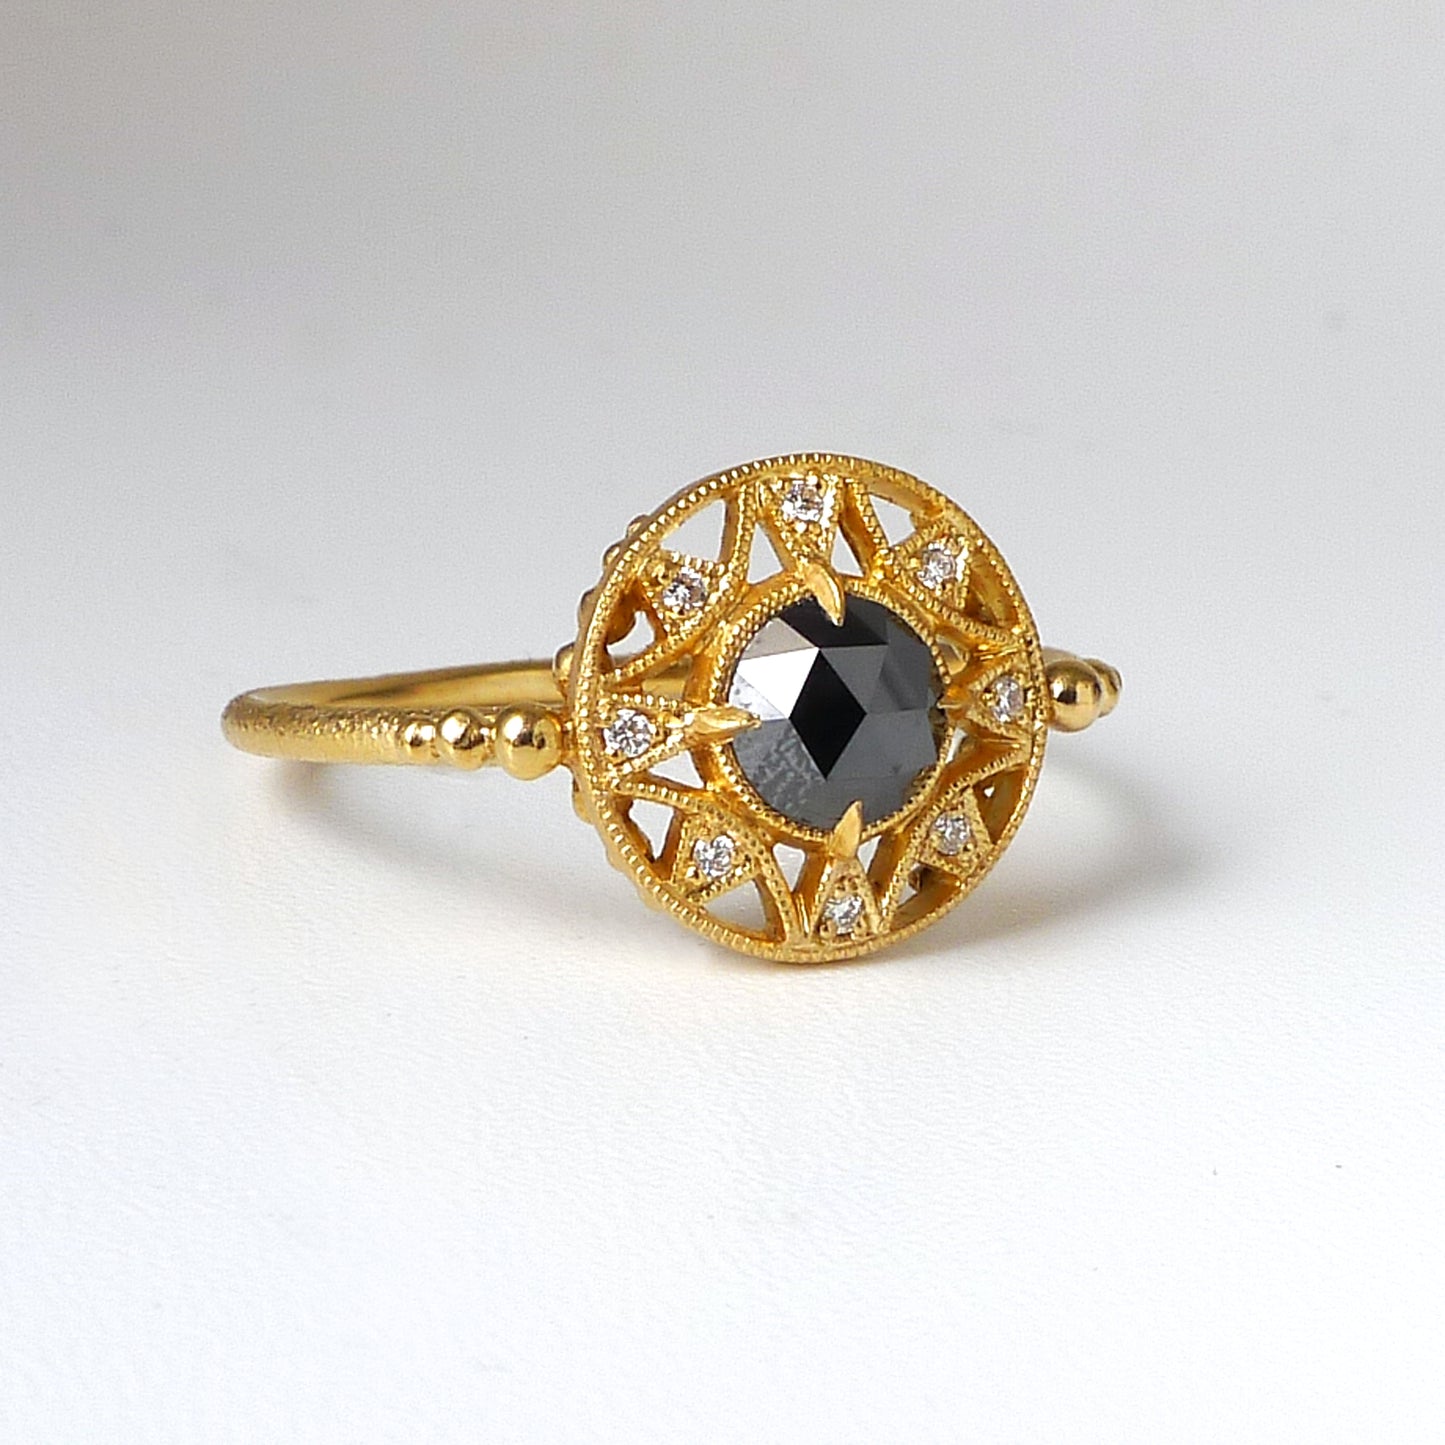 Zenith Ring w/ Black Rose Cut Diamond